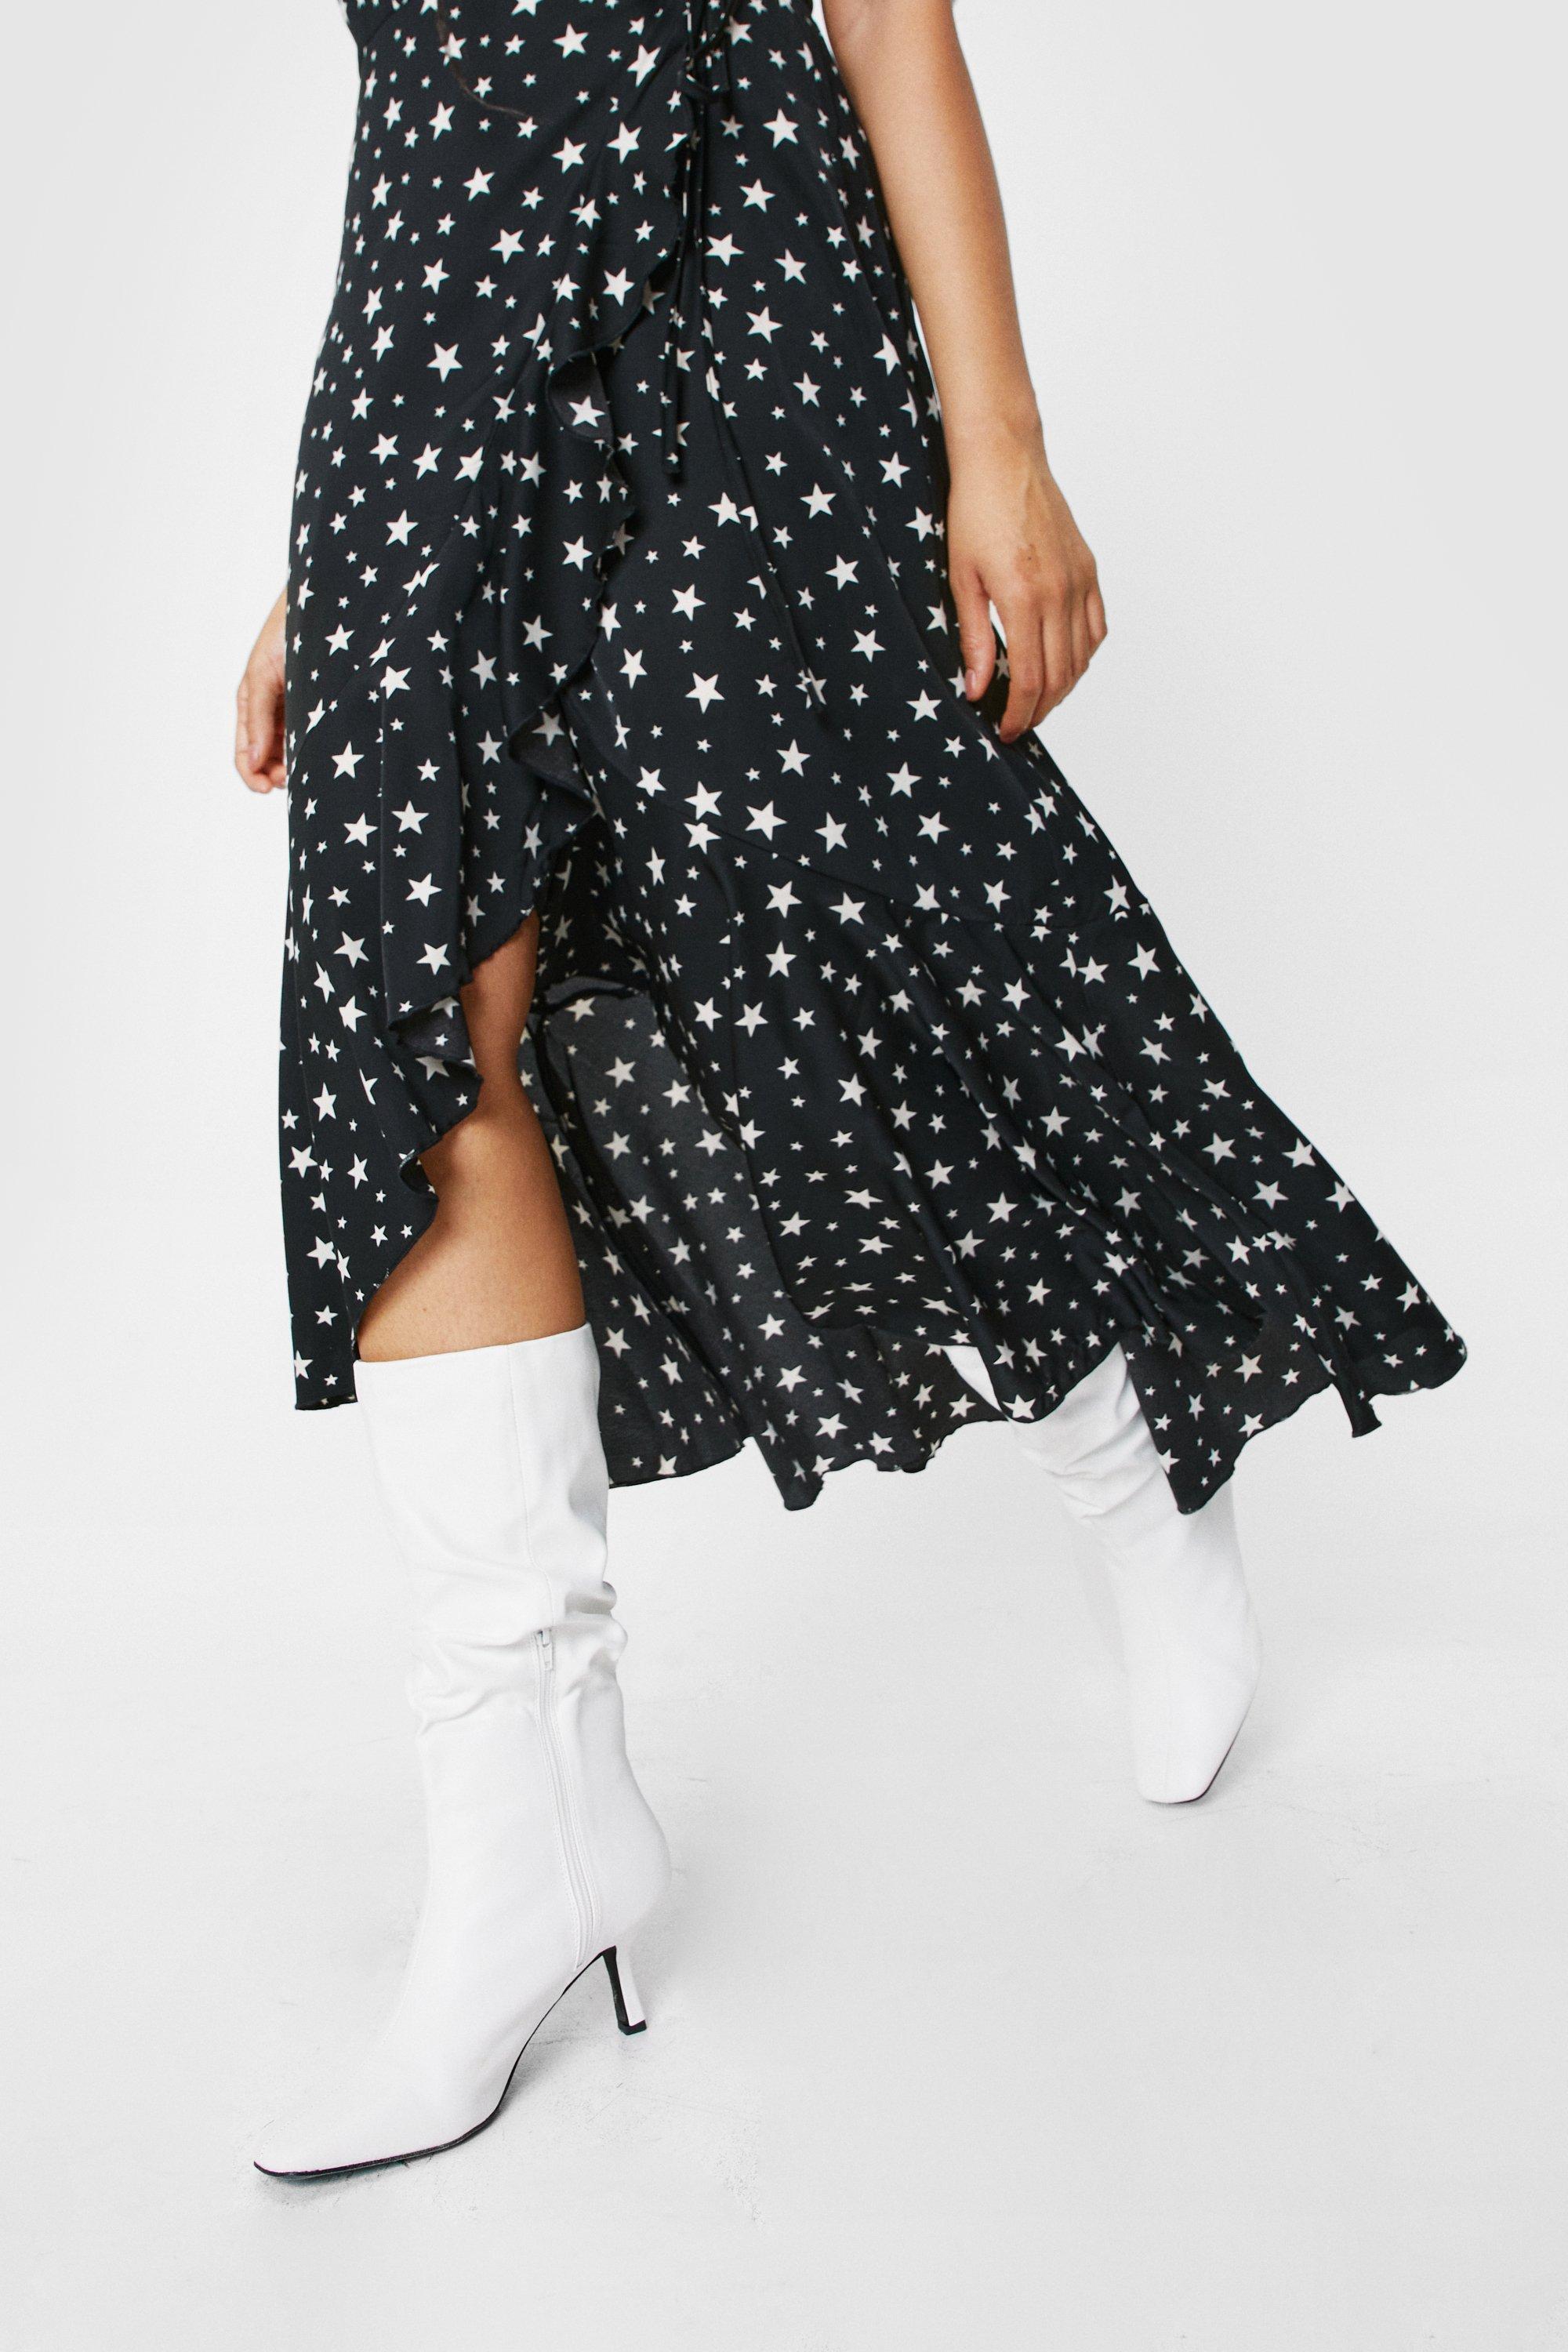 Plus Size Star Print Wrap Maxi Dress ...